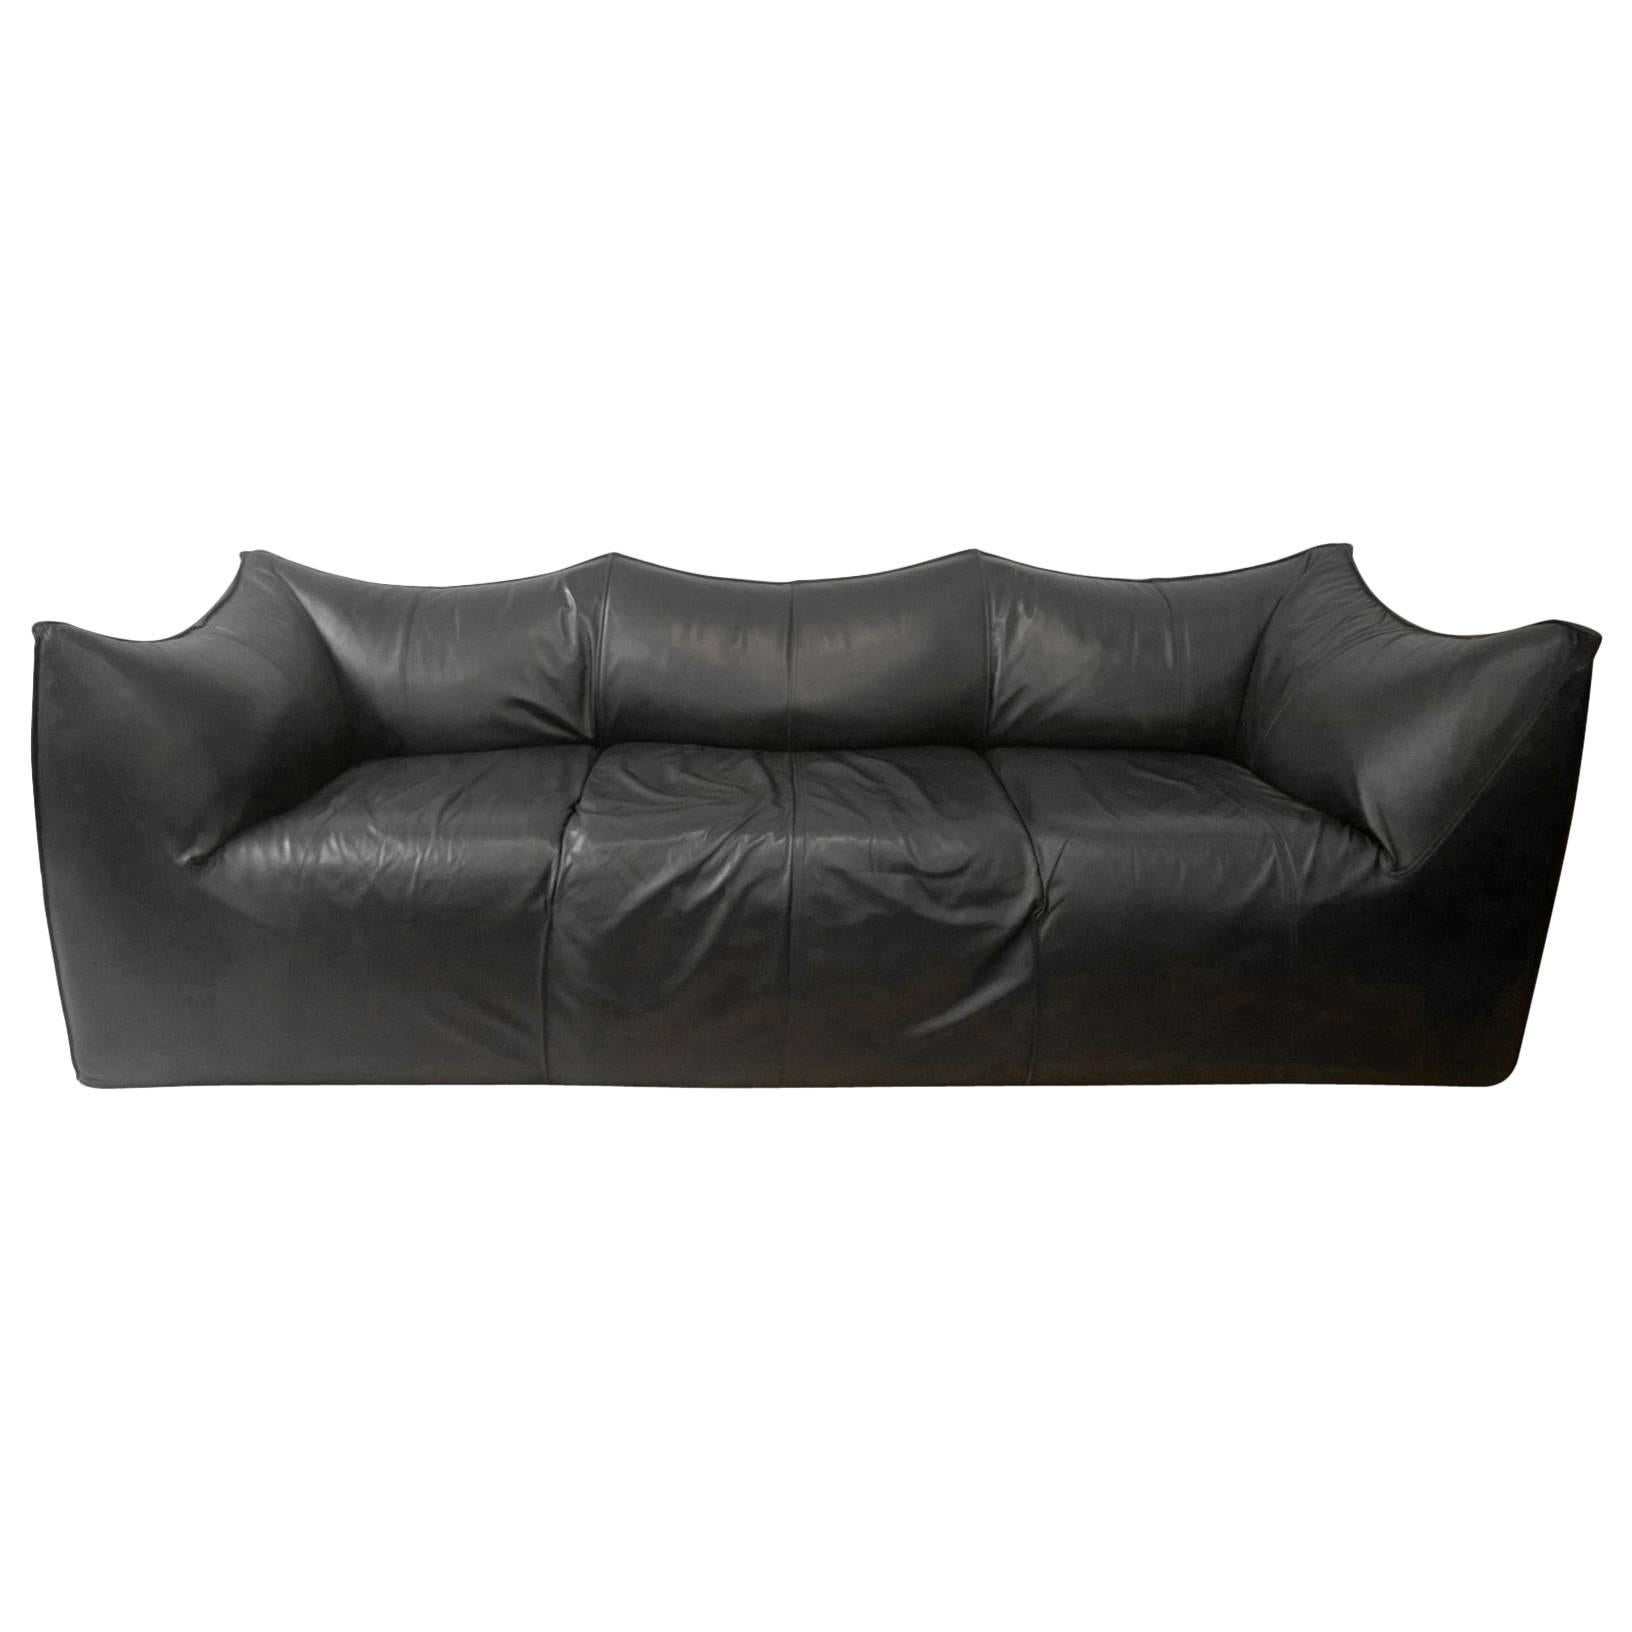 Mario Bellino "Le Bambole" Black Leather Sofa